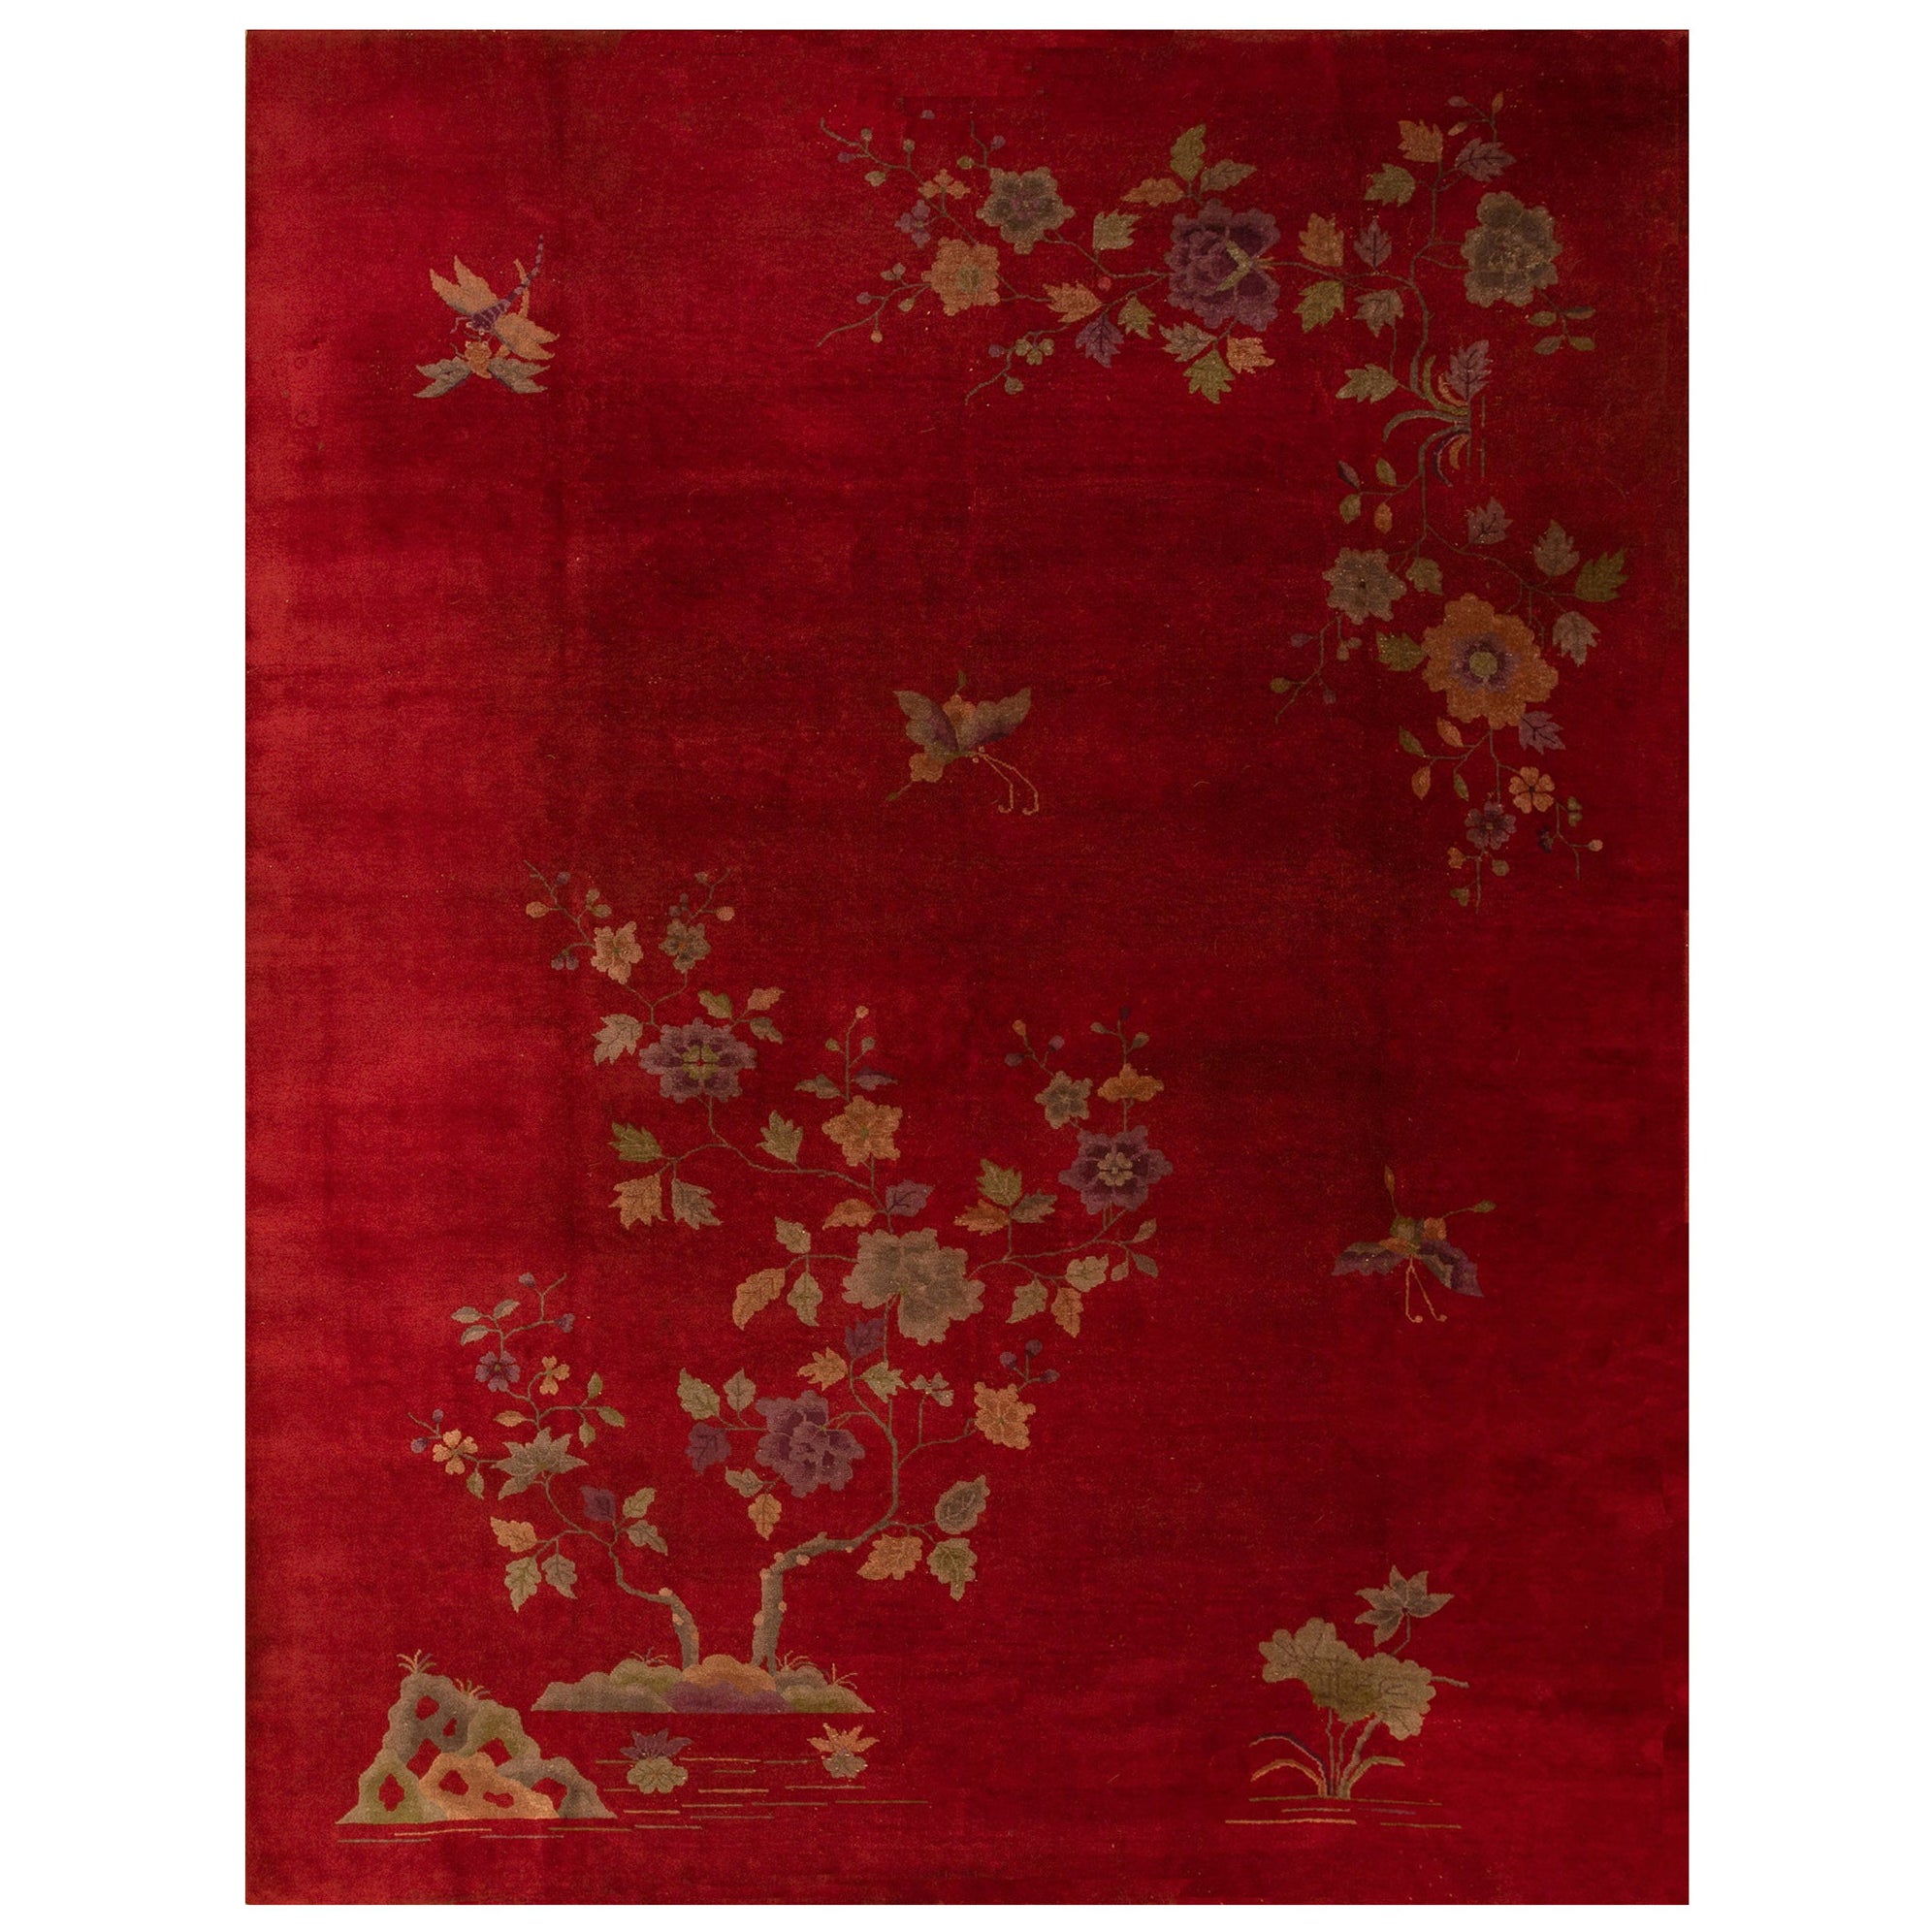 1920s Chinese Art Deco Carpet ( 9' x 12' - 275 x 365 )